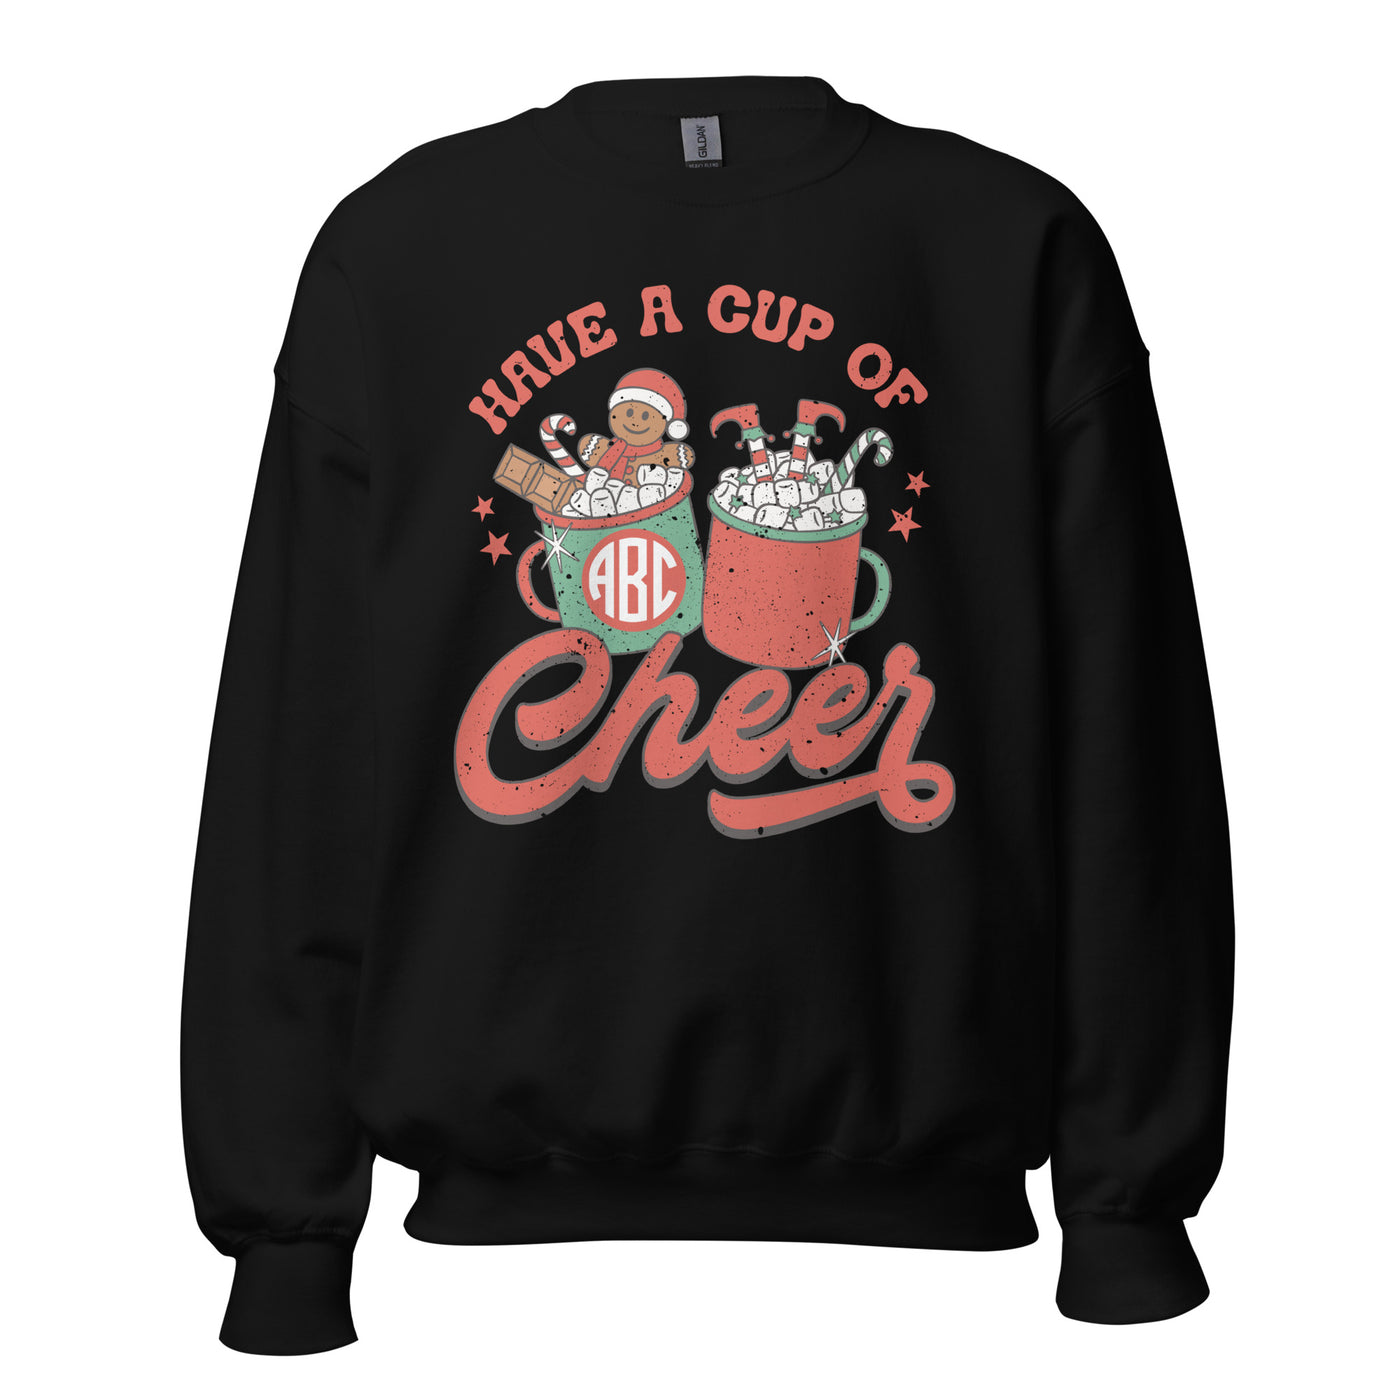 Monogrammed 'Have A Cup Of Cheer' Crewneck Sweatshirt